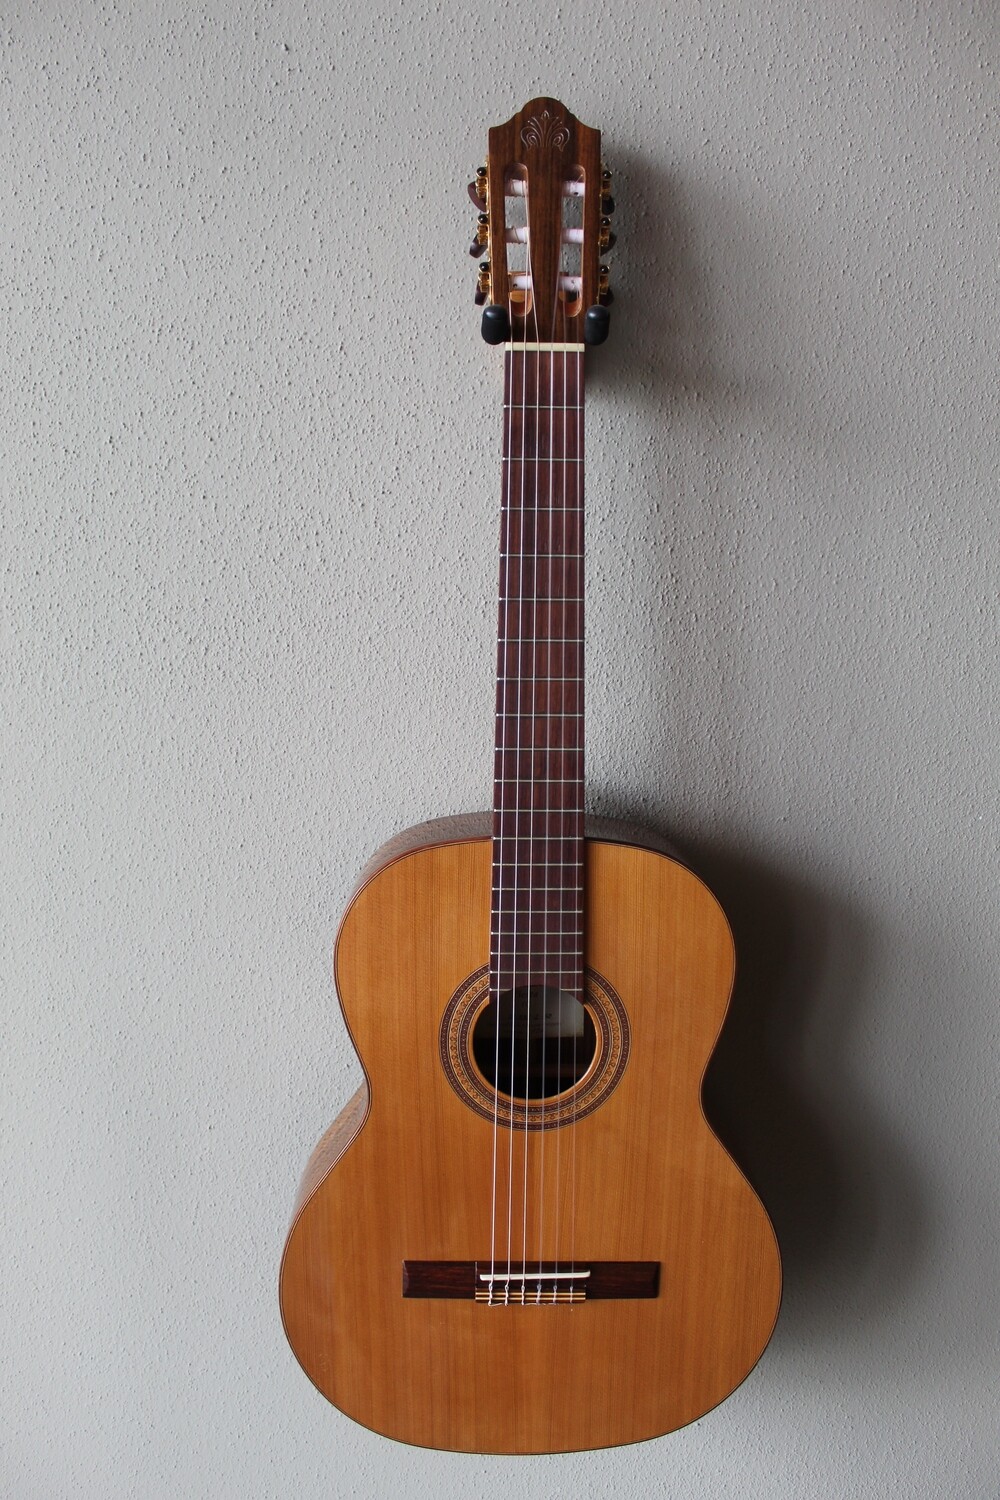 Used Orpheus Valley Guitars (Kremona) Fiesta FC Classical Guitar